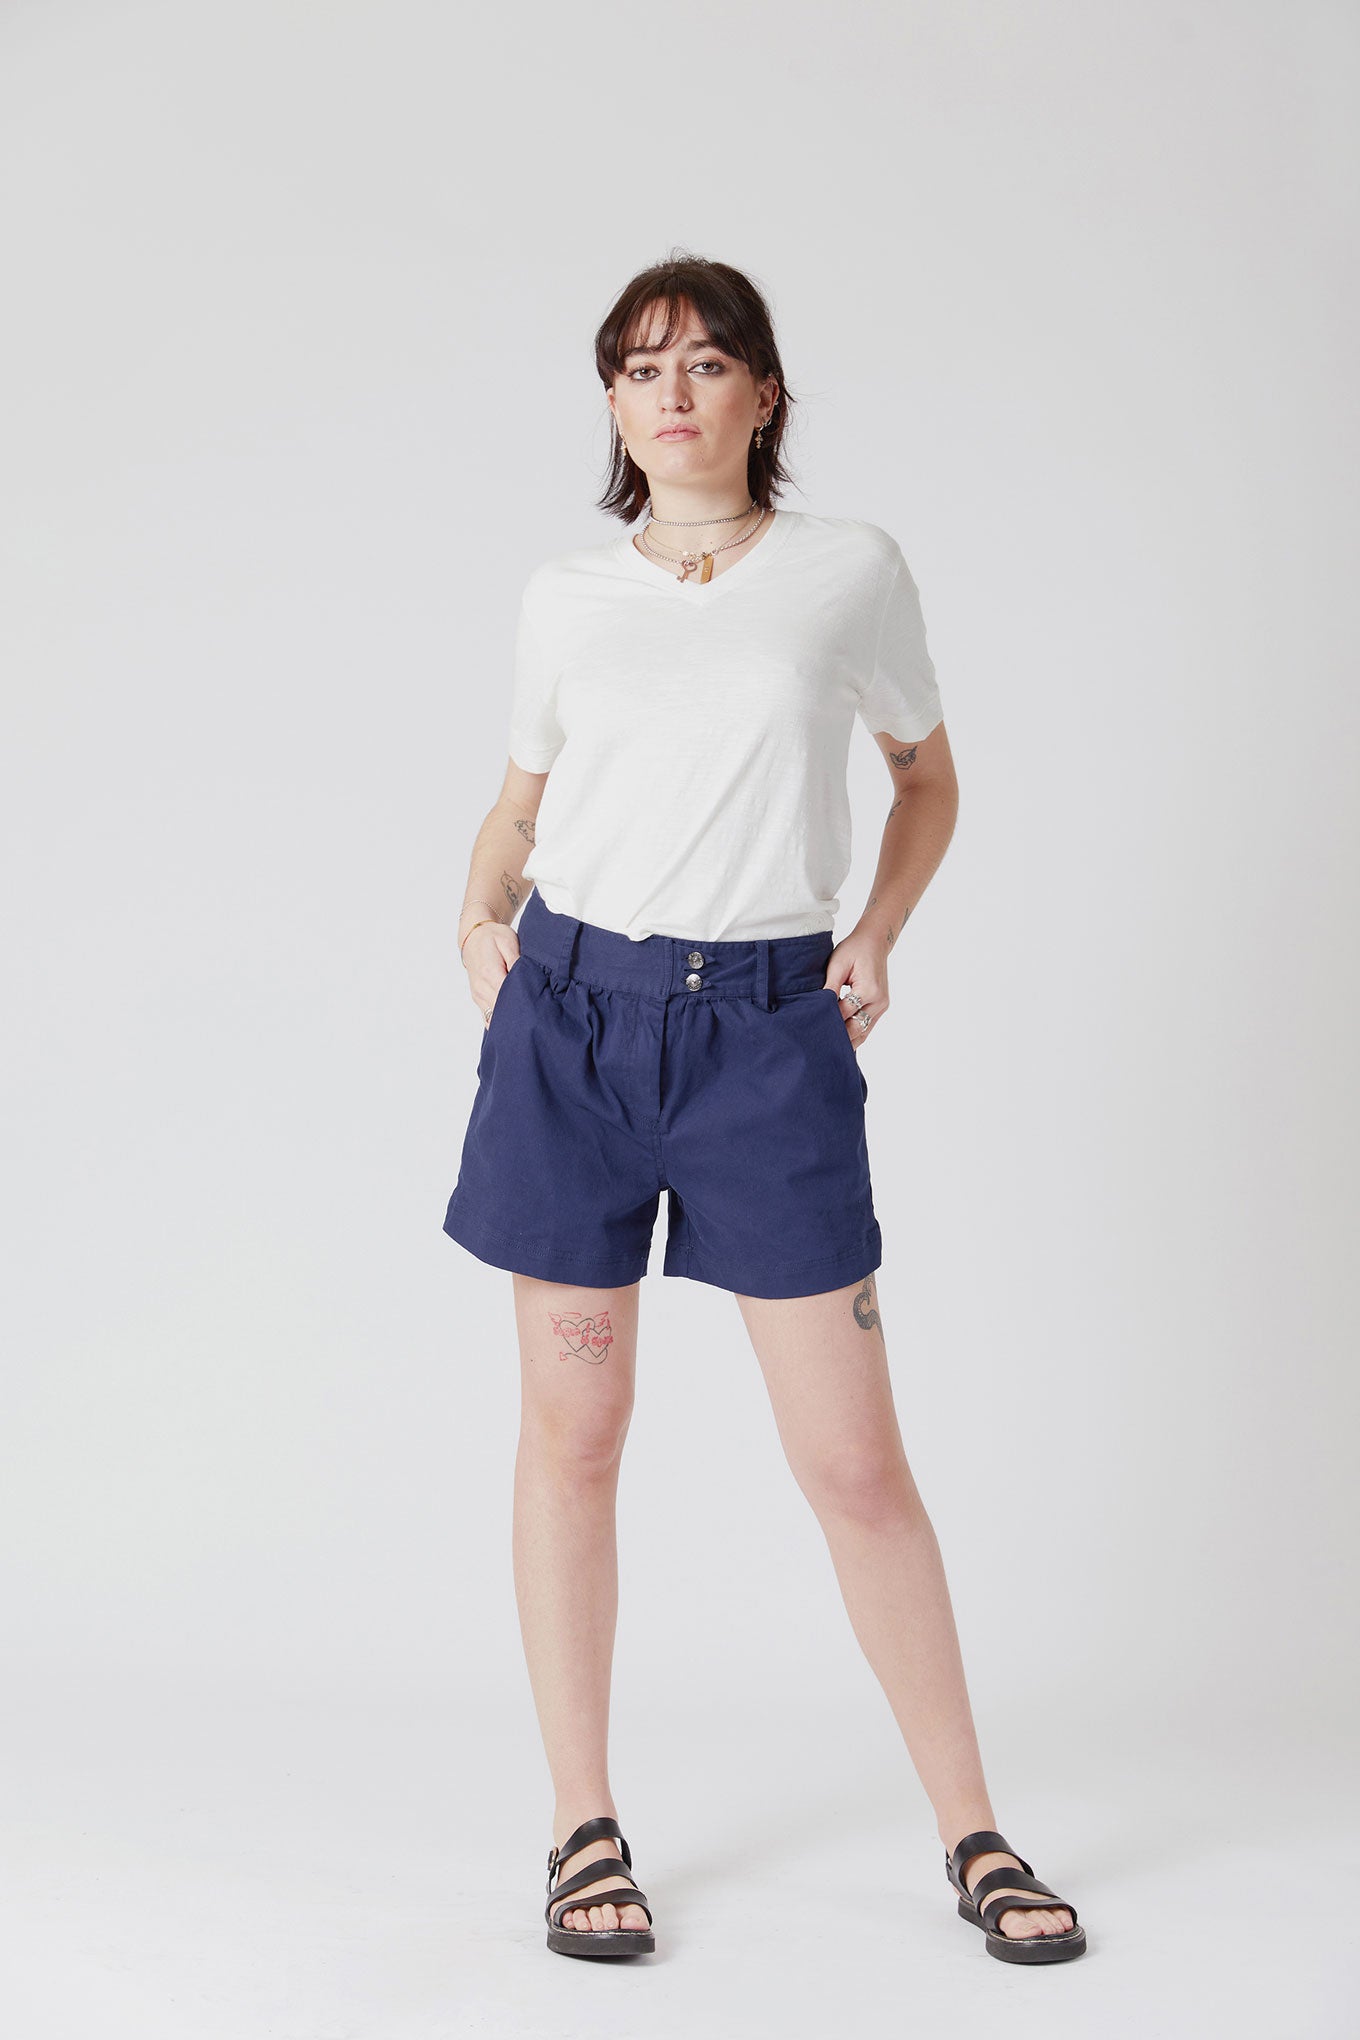 LILY Organic Cotton Shorts Navy, SIZE 2 / UK 10 / EUR 38